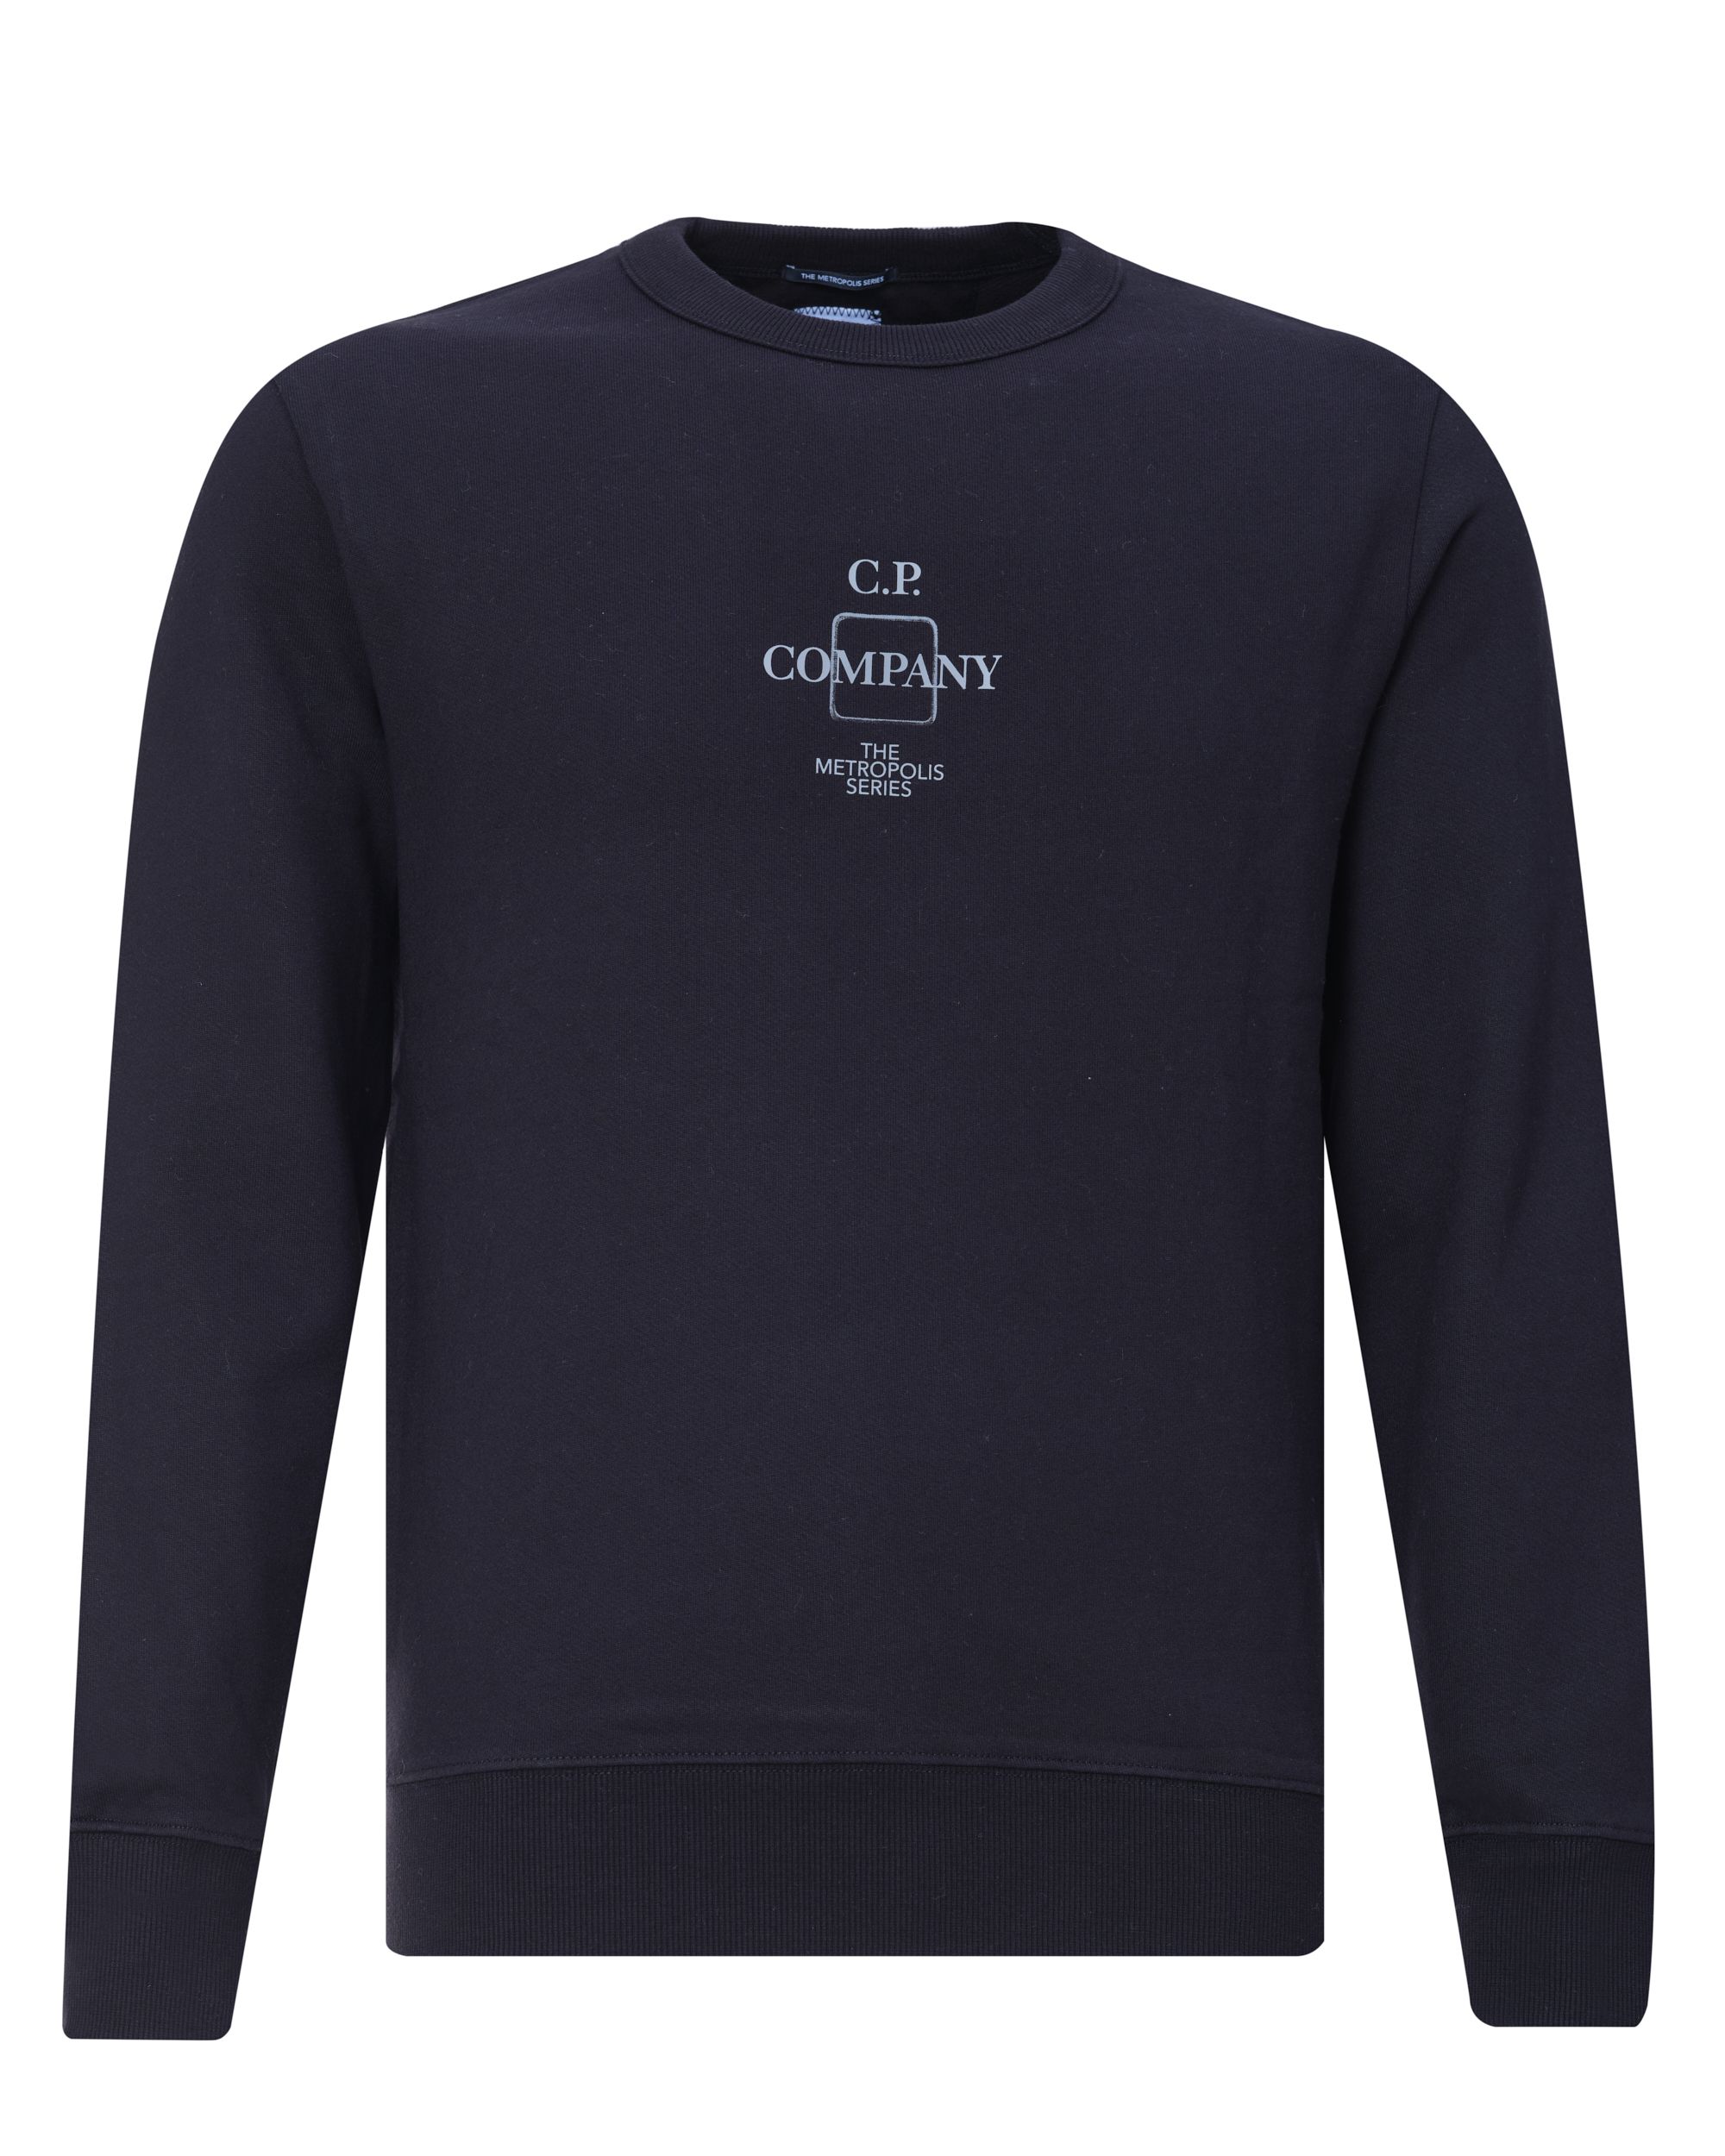 C.P Company Sweater Zwart 079349-001-L